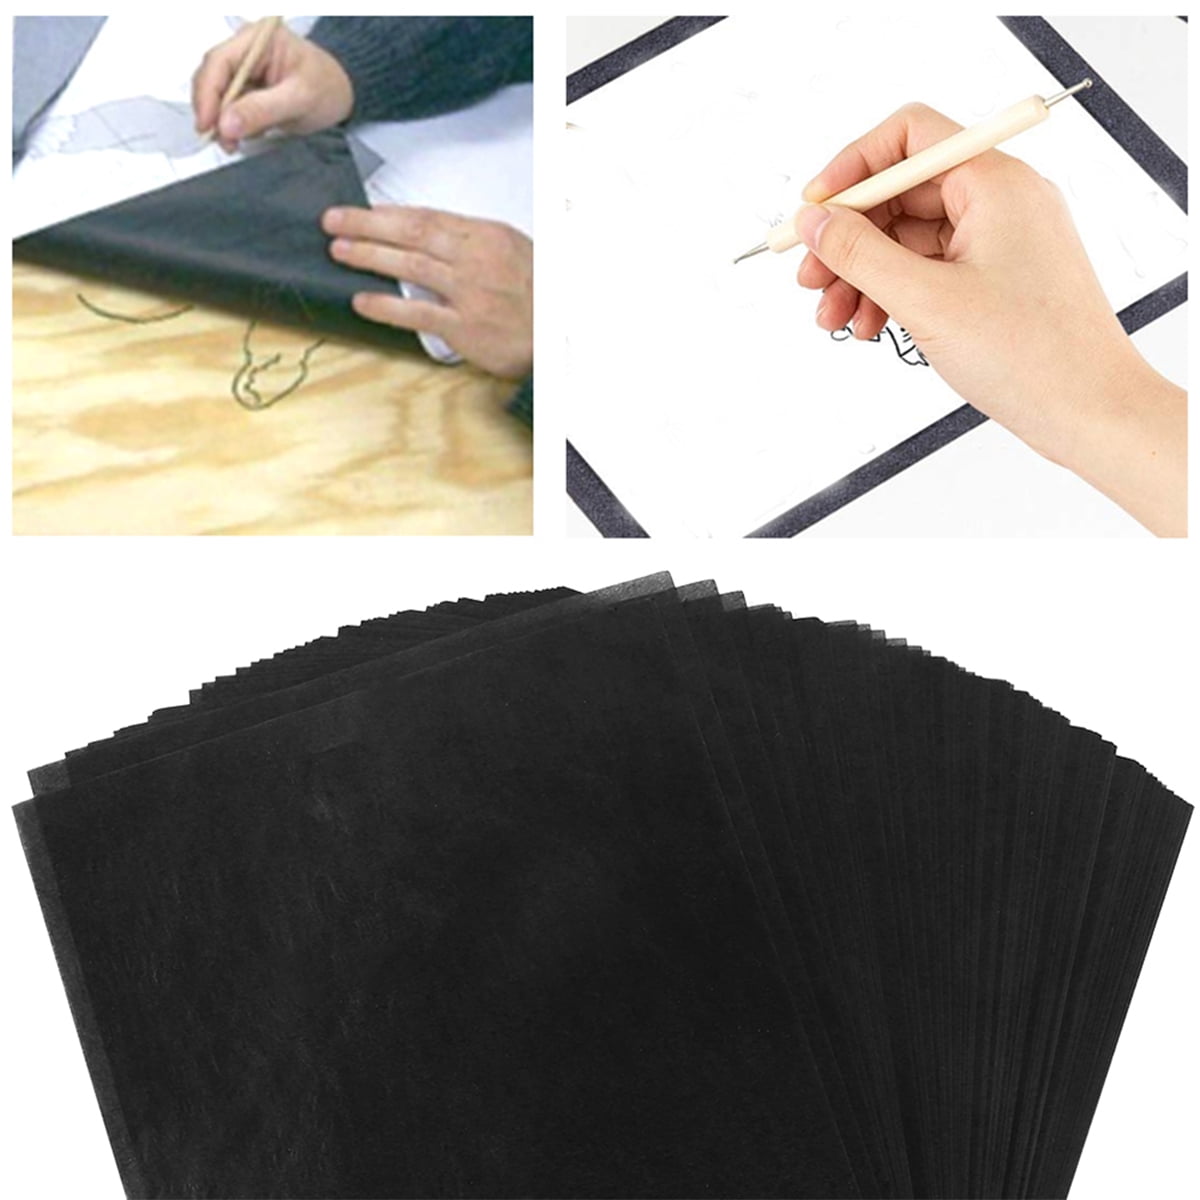  VILLCASE 100 Sheets Drawing Paper Transfer Paper for Drawing a4  Carbon Transfer Paper Printer Paper Toilet Paper Drawing Supplies Black  Printer Paper Graphite Carbon Transfer Paper